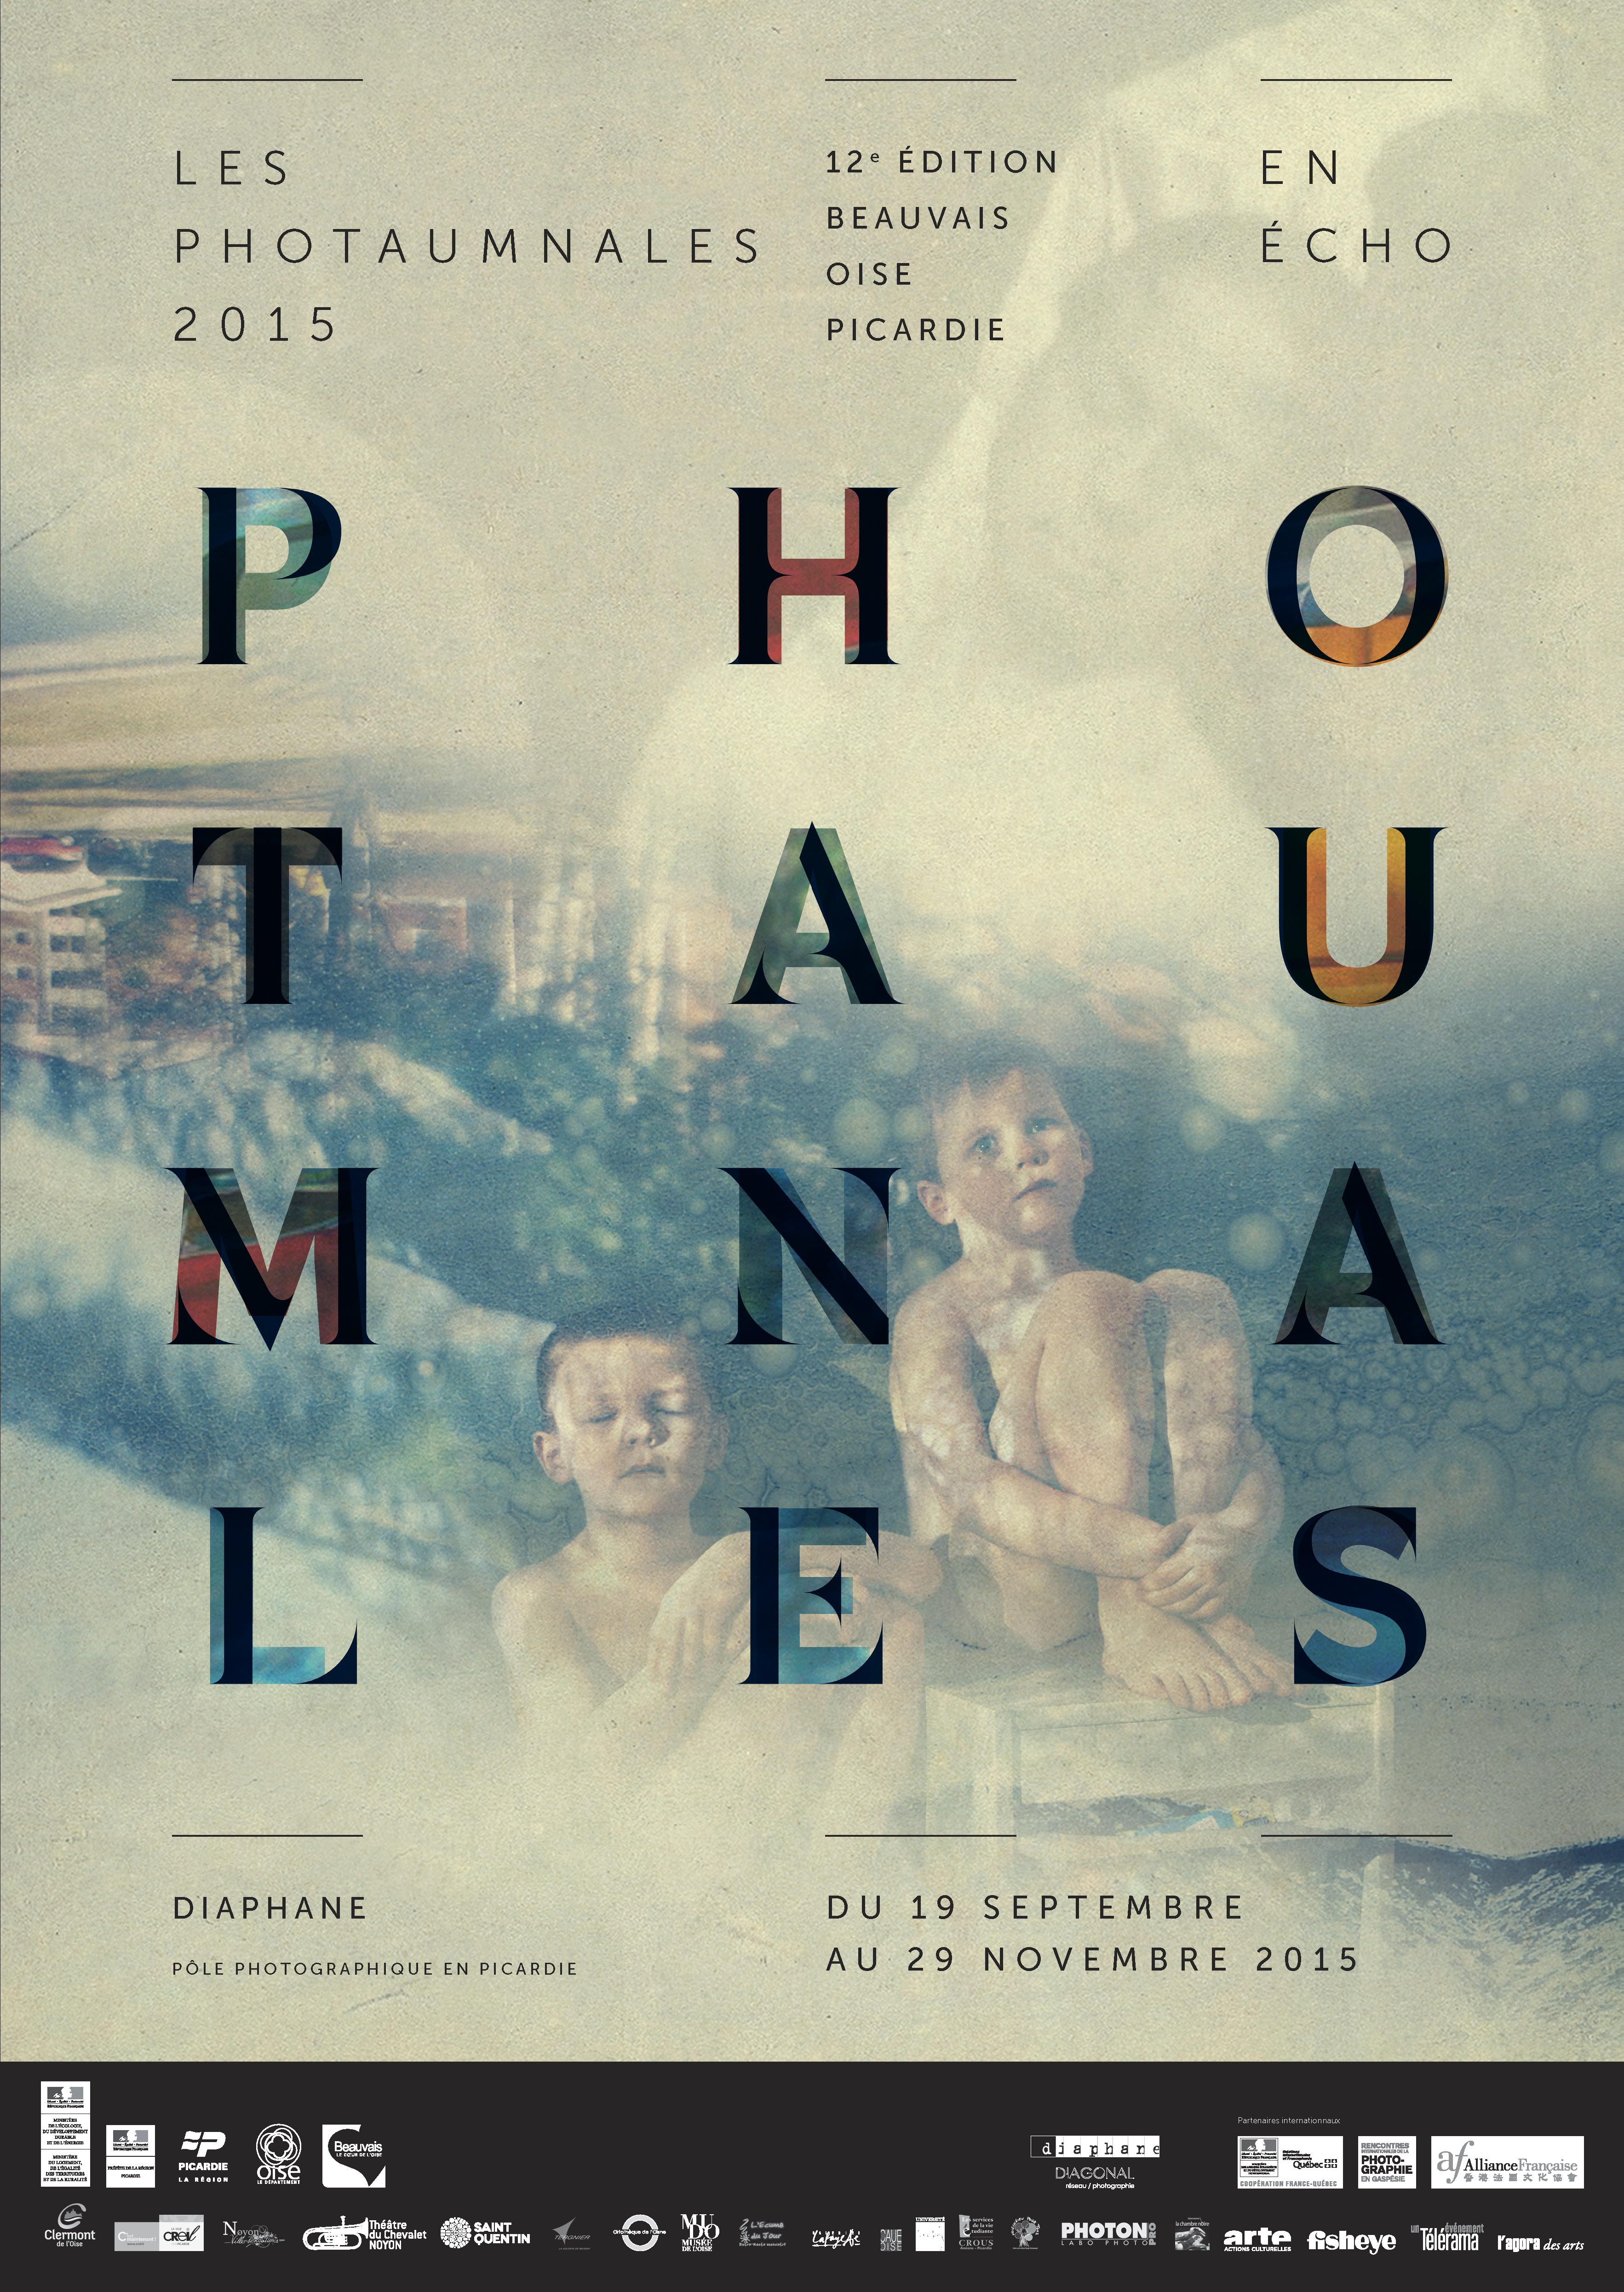 Photaumnales 2015